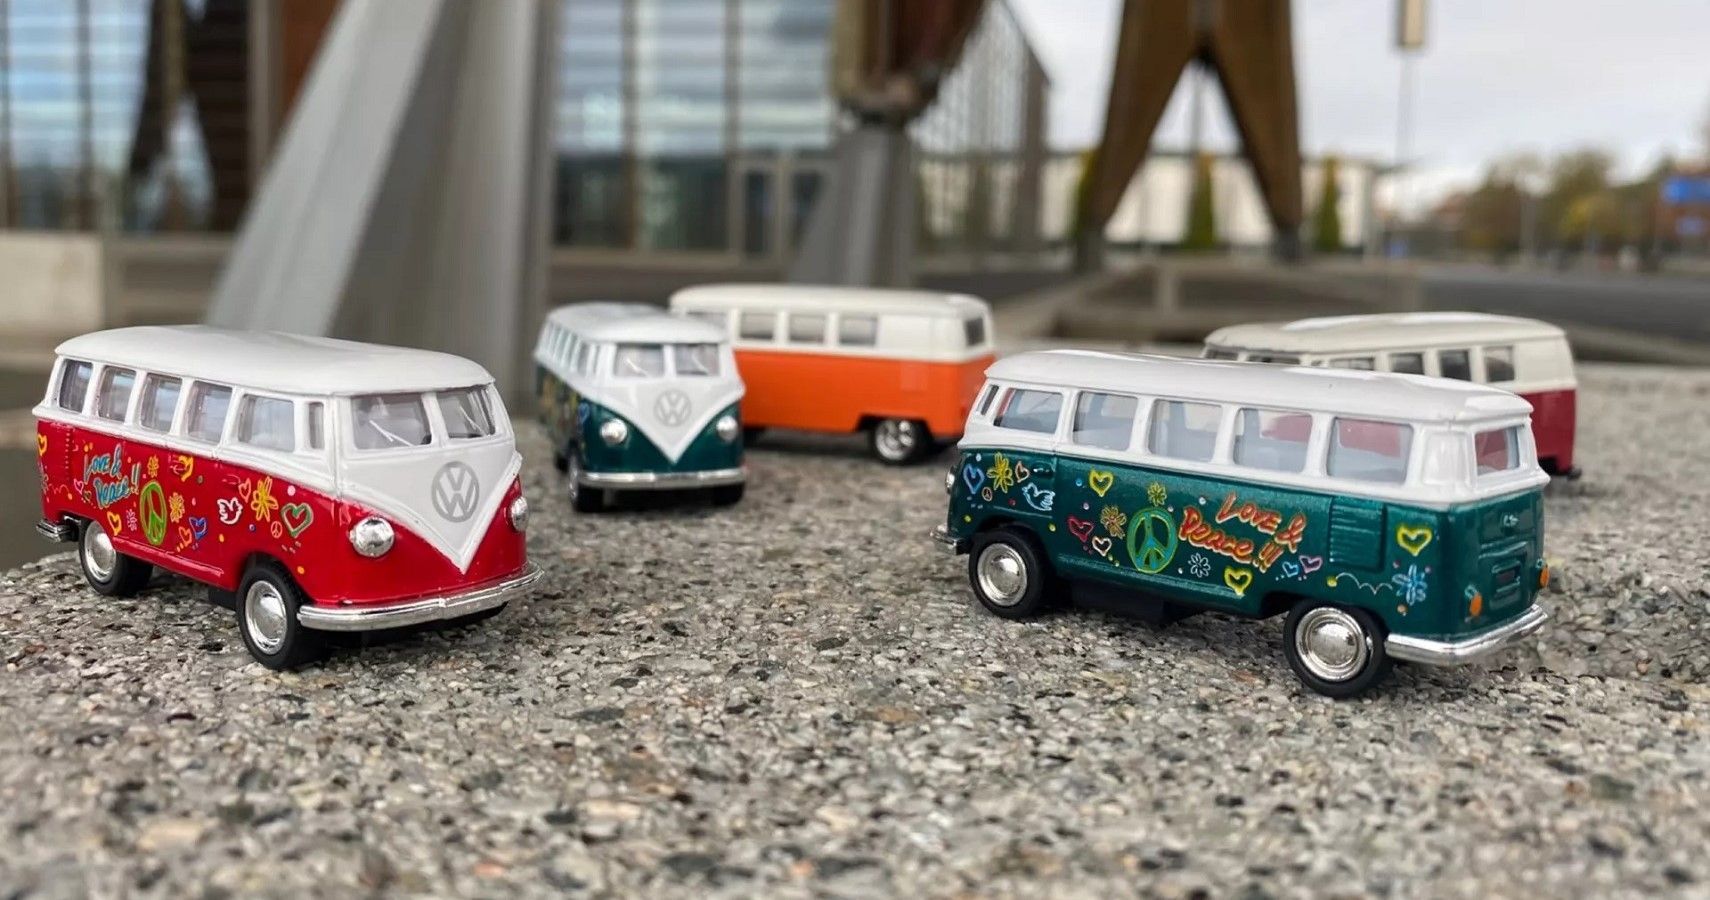 Volkswagen camper toys, scattered on table in building